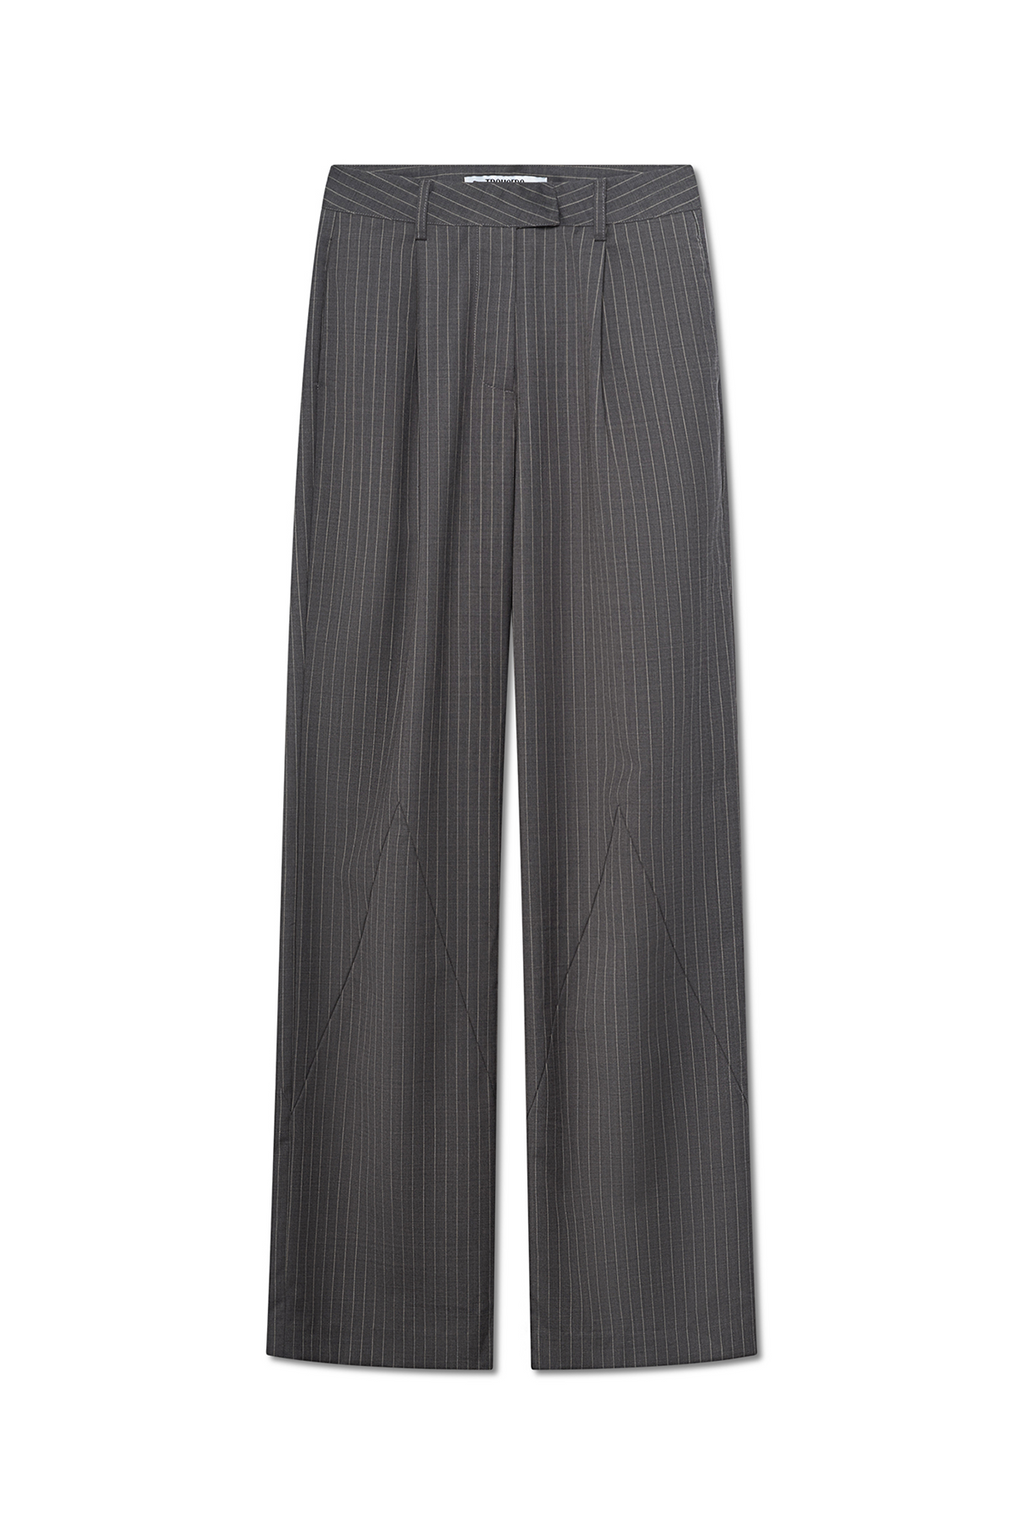 Grey Pinstripe Trouser